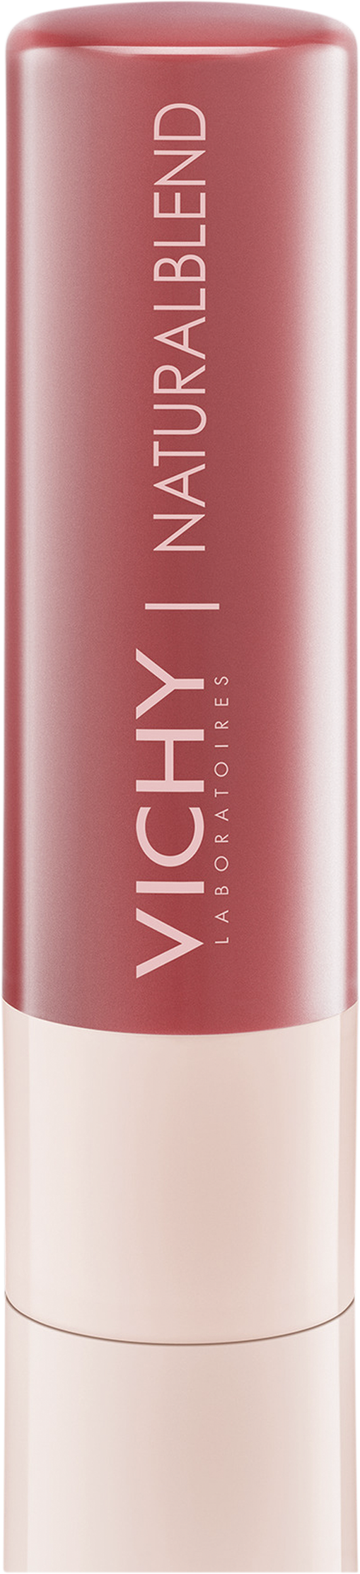 Vichy NaturalBlend lip balm - nude